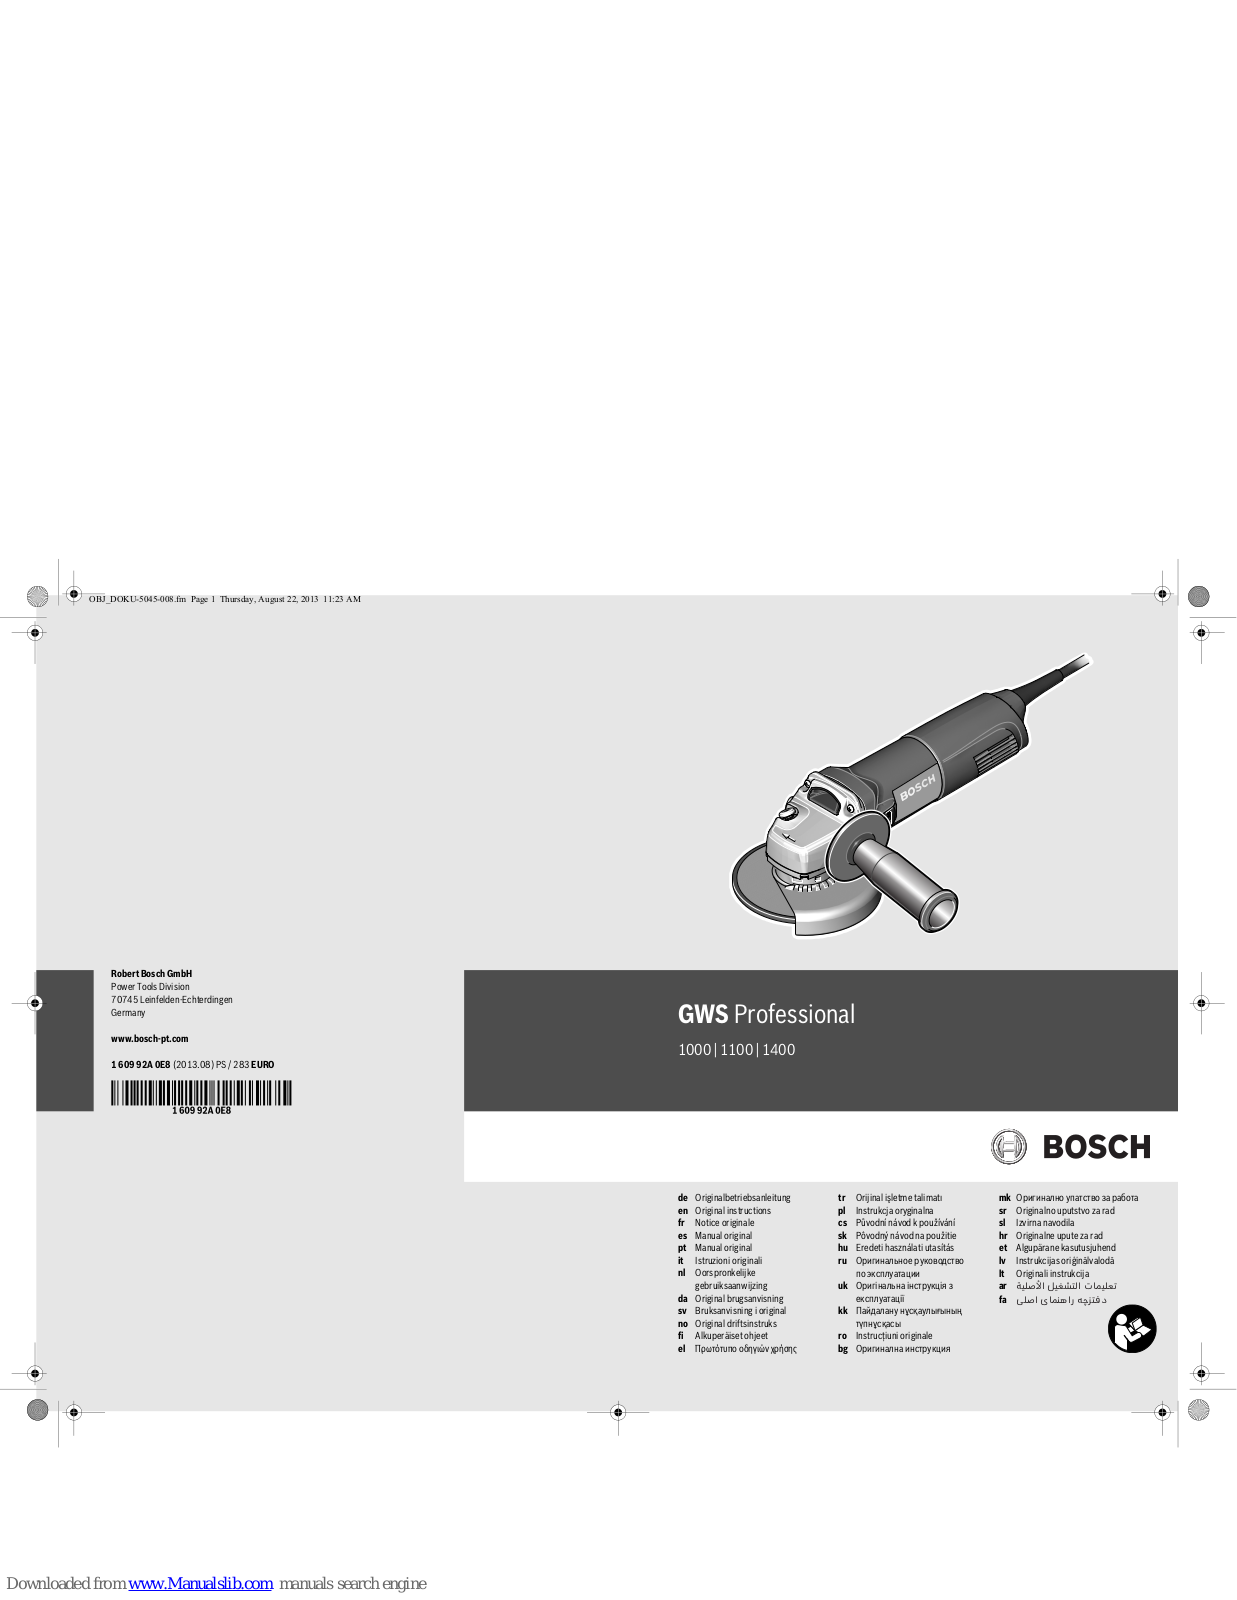 Bosch GWS Professional 1000, GWS Professional 1100, GWS Professional 1400 Original Instructions Manual